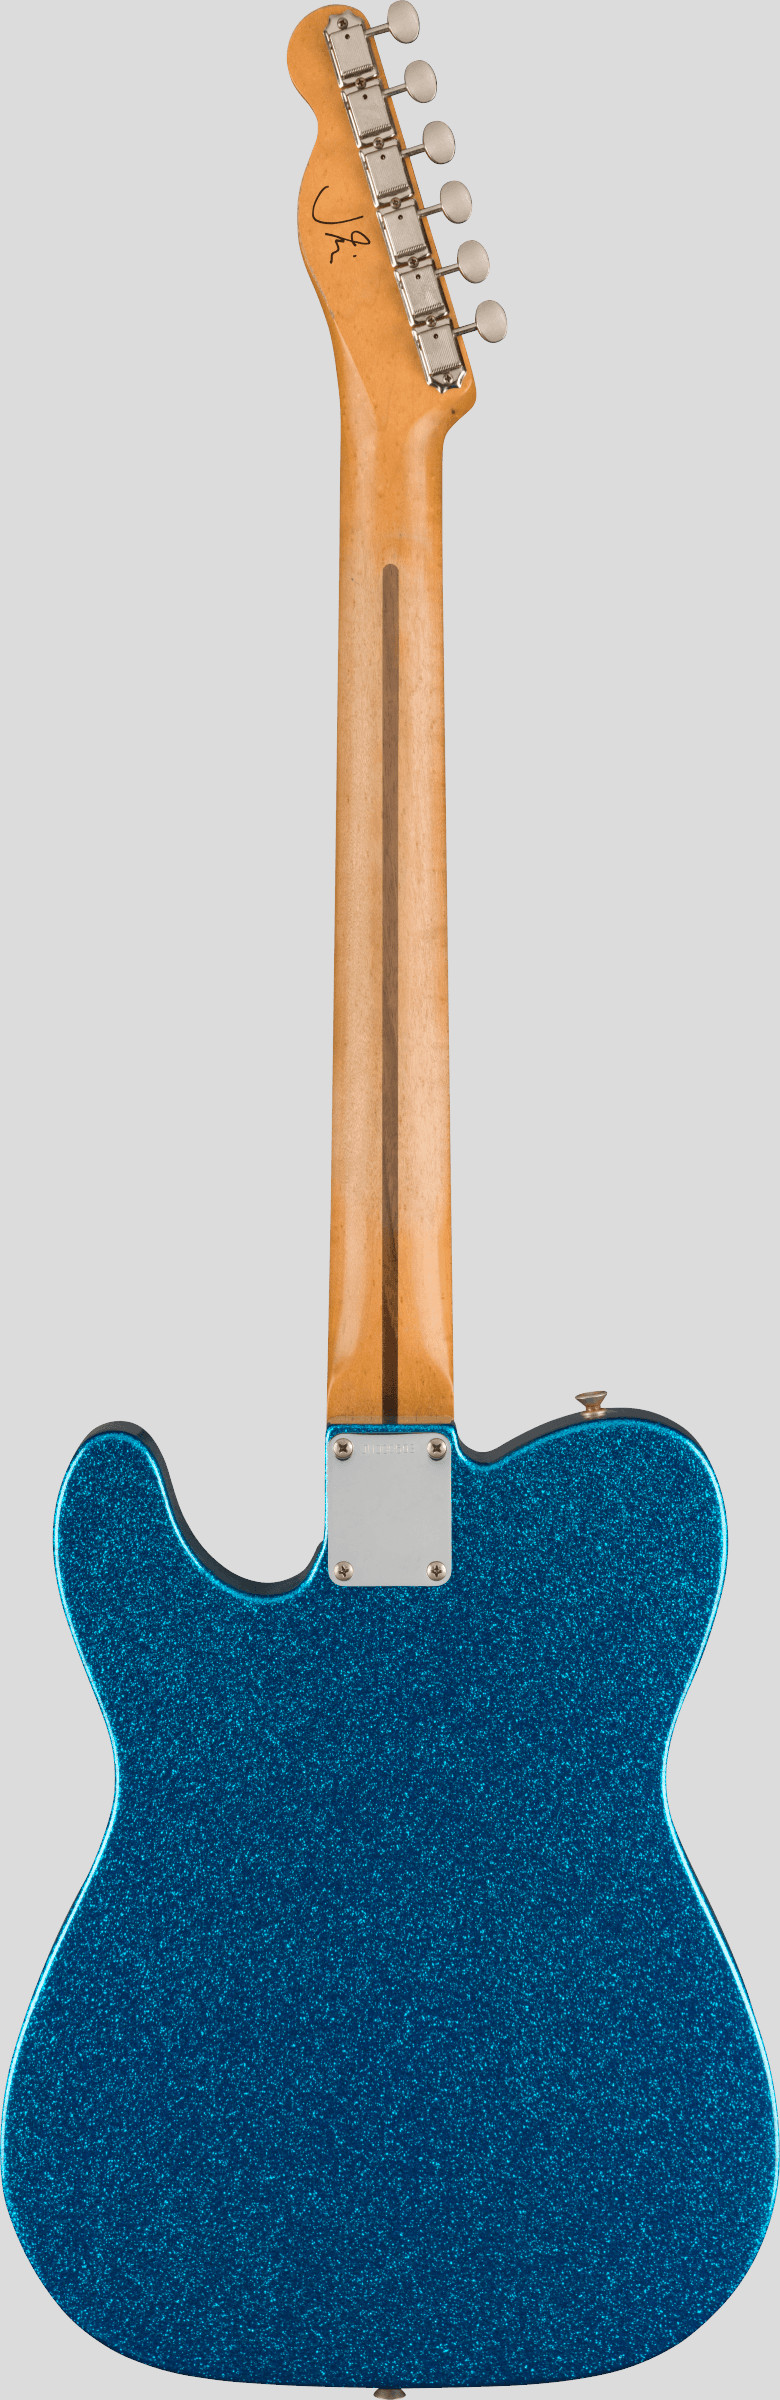 Fender J Mascis Telecaster Bottle Rocket Blue Flake 2